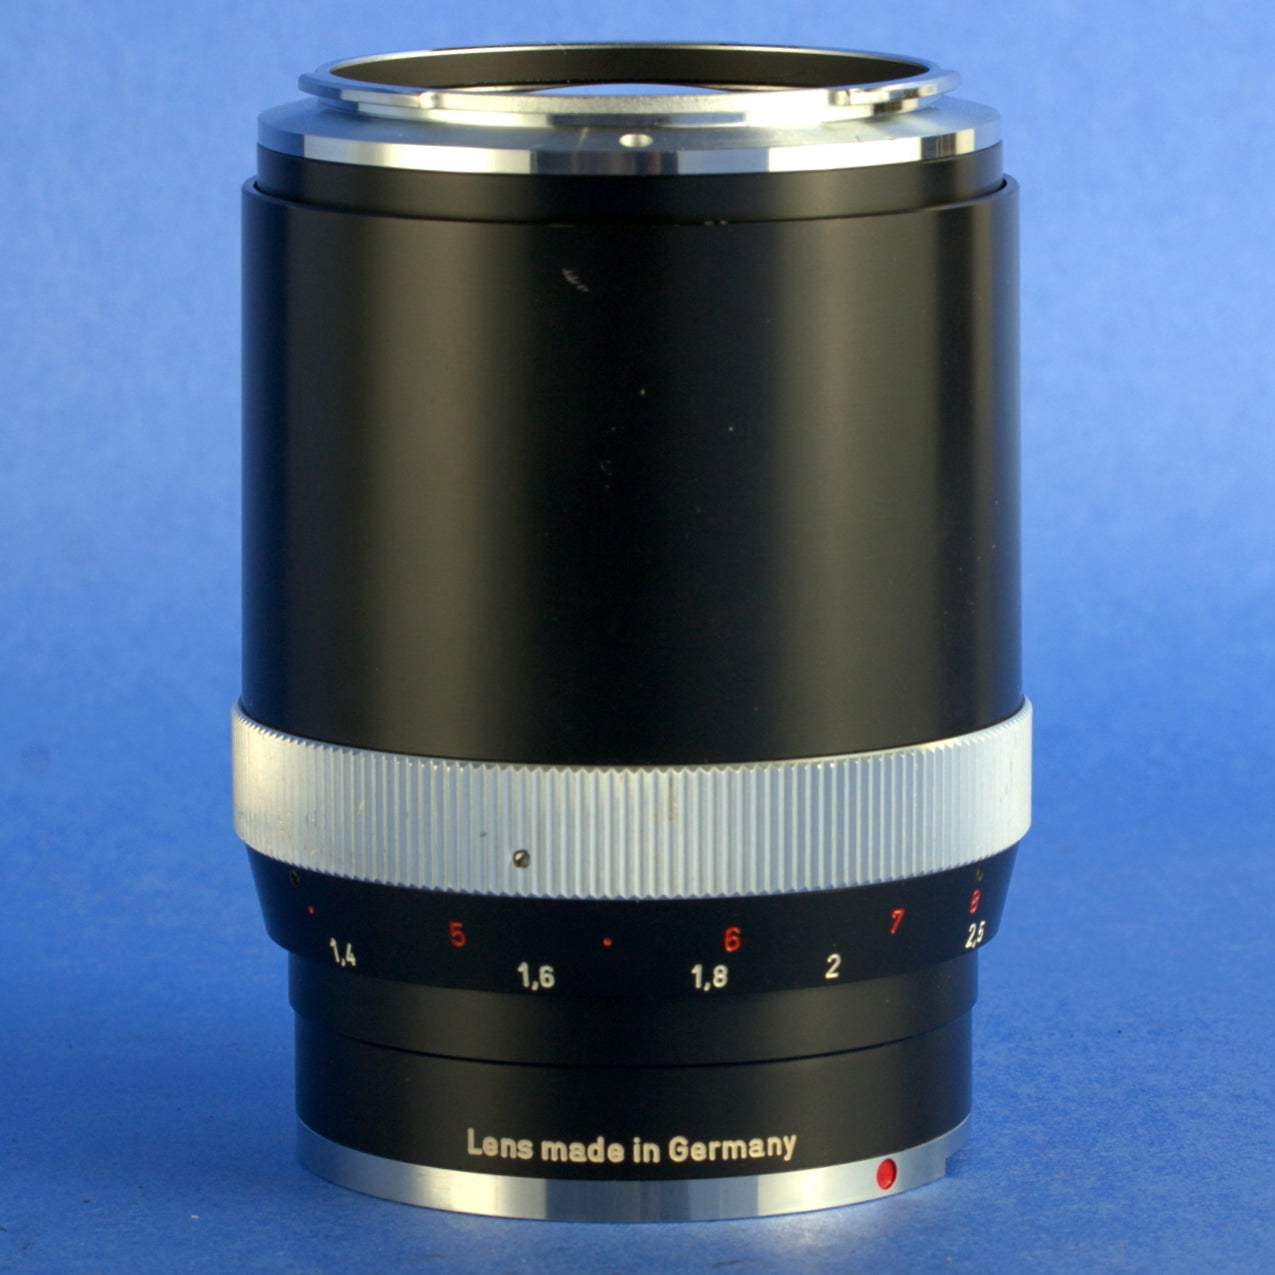 Contarex 135mm 2.8 Zeiss Sonnar Lens Beautiful Condition